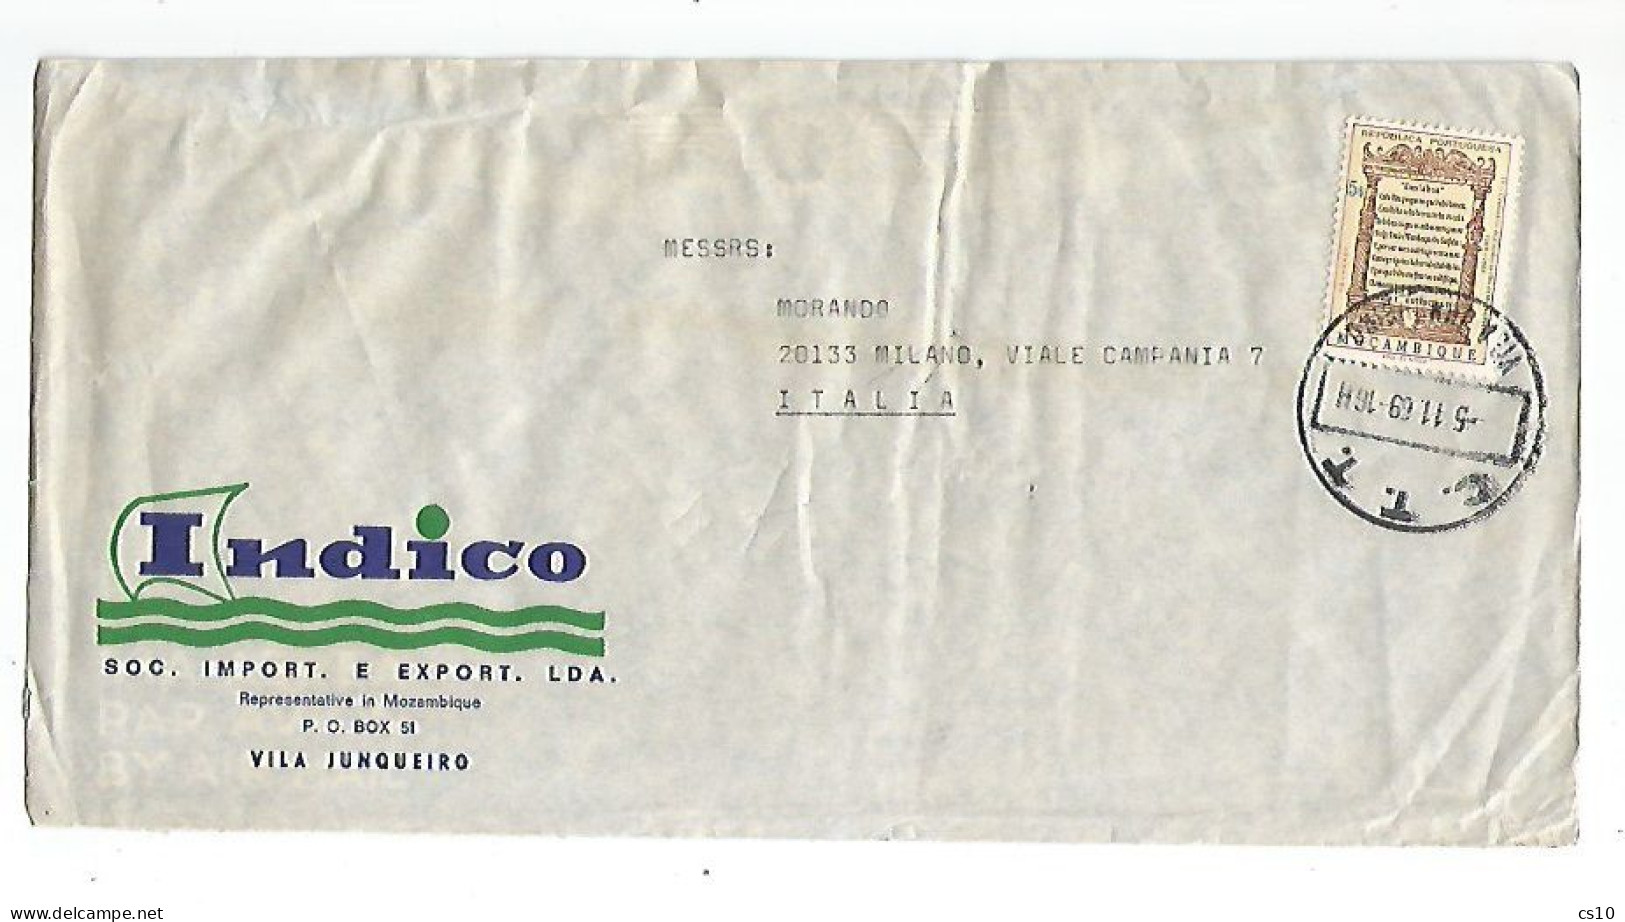 Mocambique Commerce Cover Vila Junqueiro 5nov1969 To Italy With Colnial "Lusiadas" 5$ Solo Franking - Mozambique